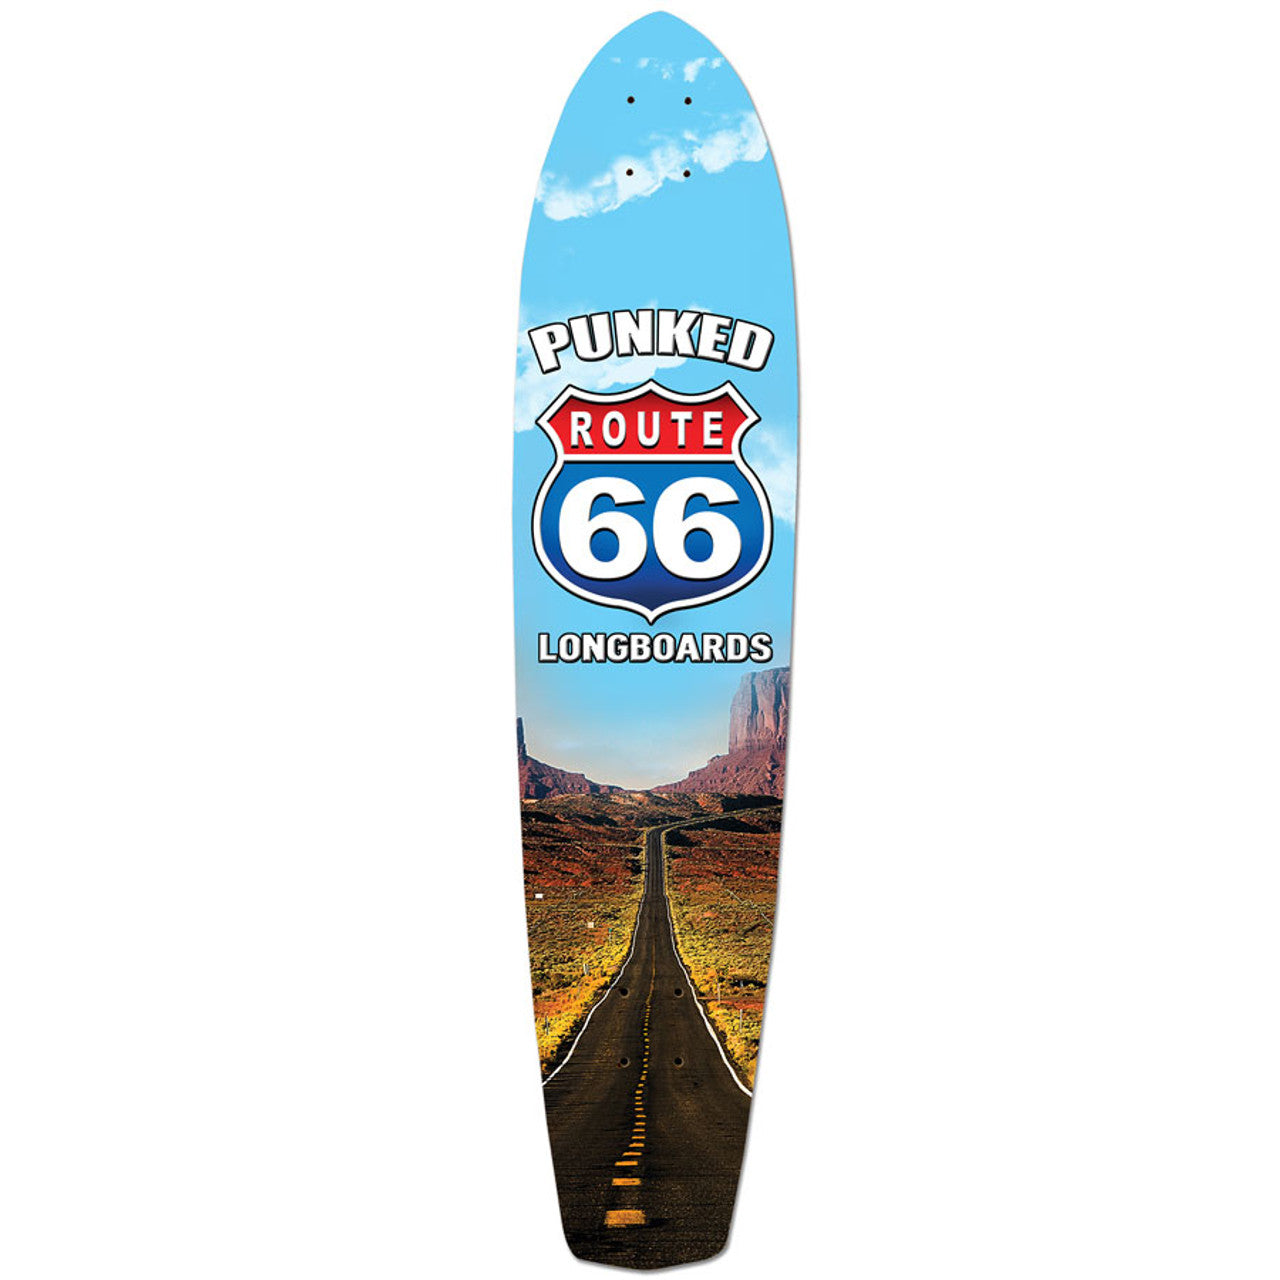 Yocaher Slimkick Longboard Deck - Route 66 Series - The Run